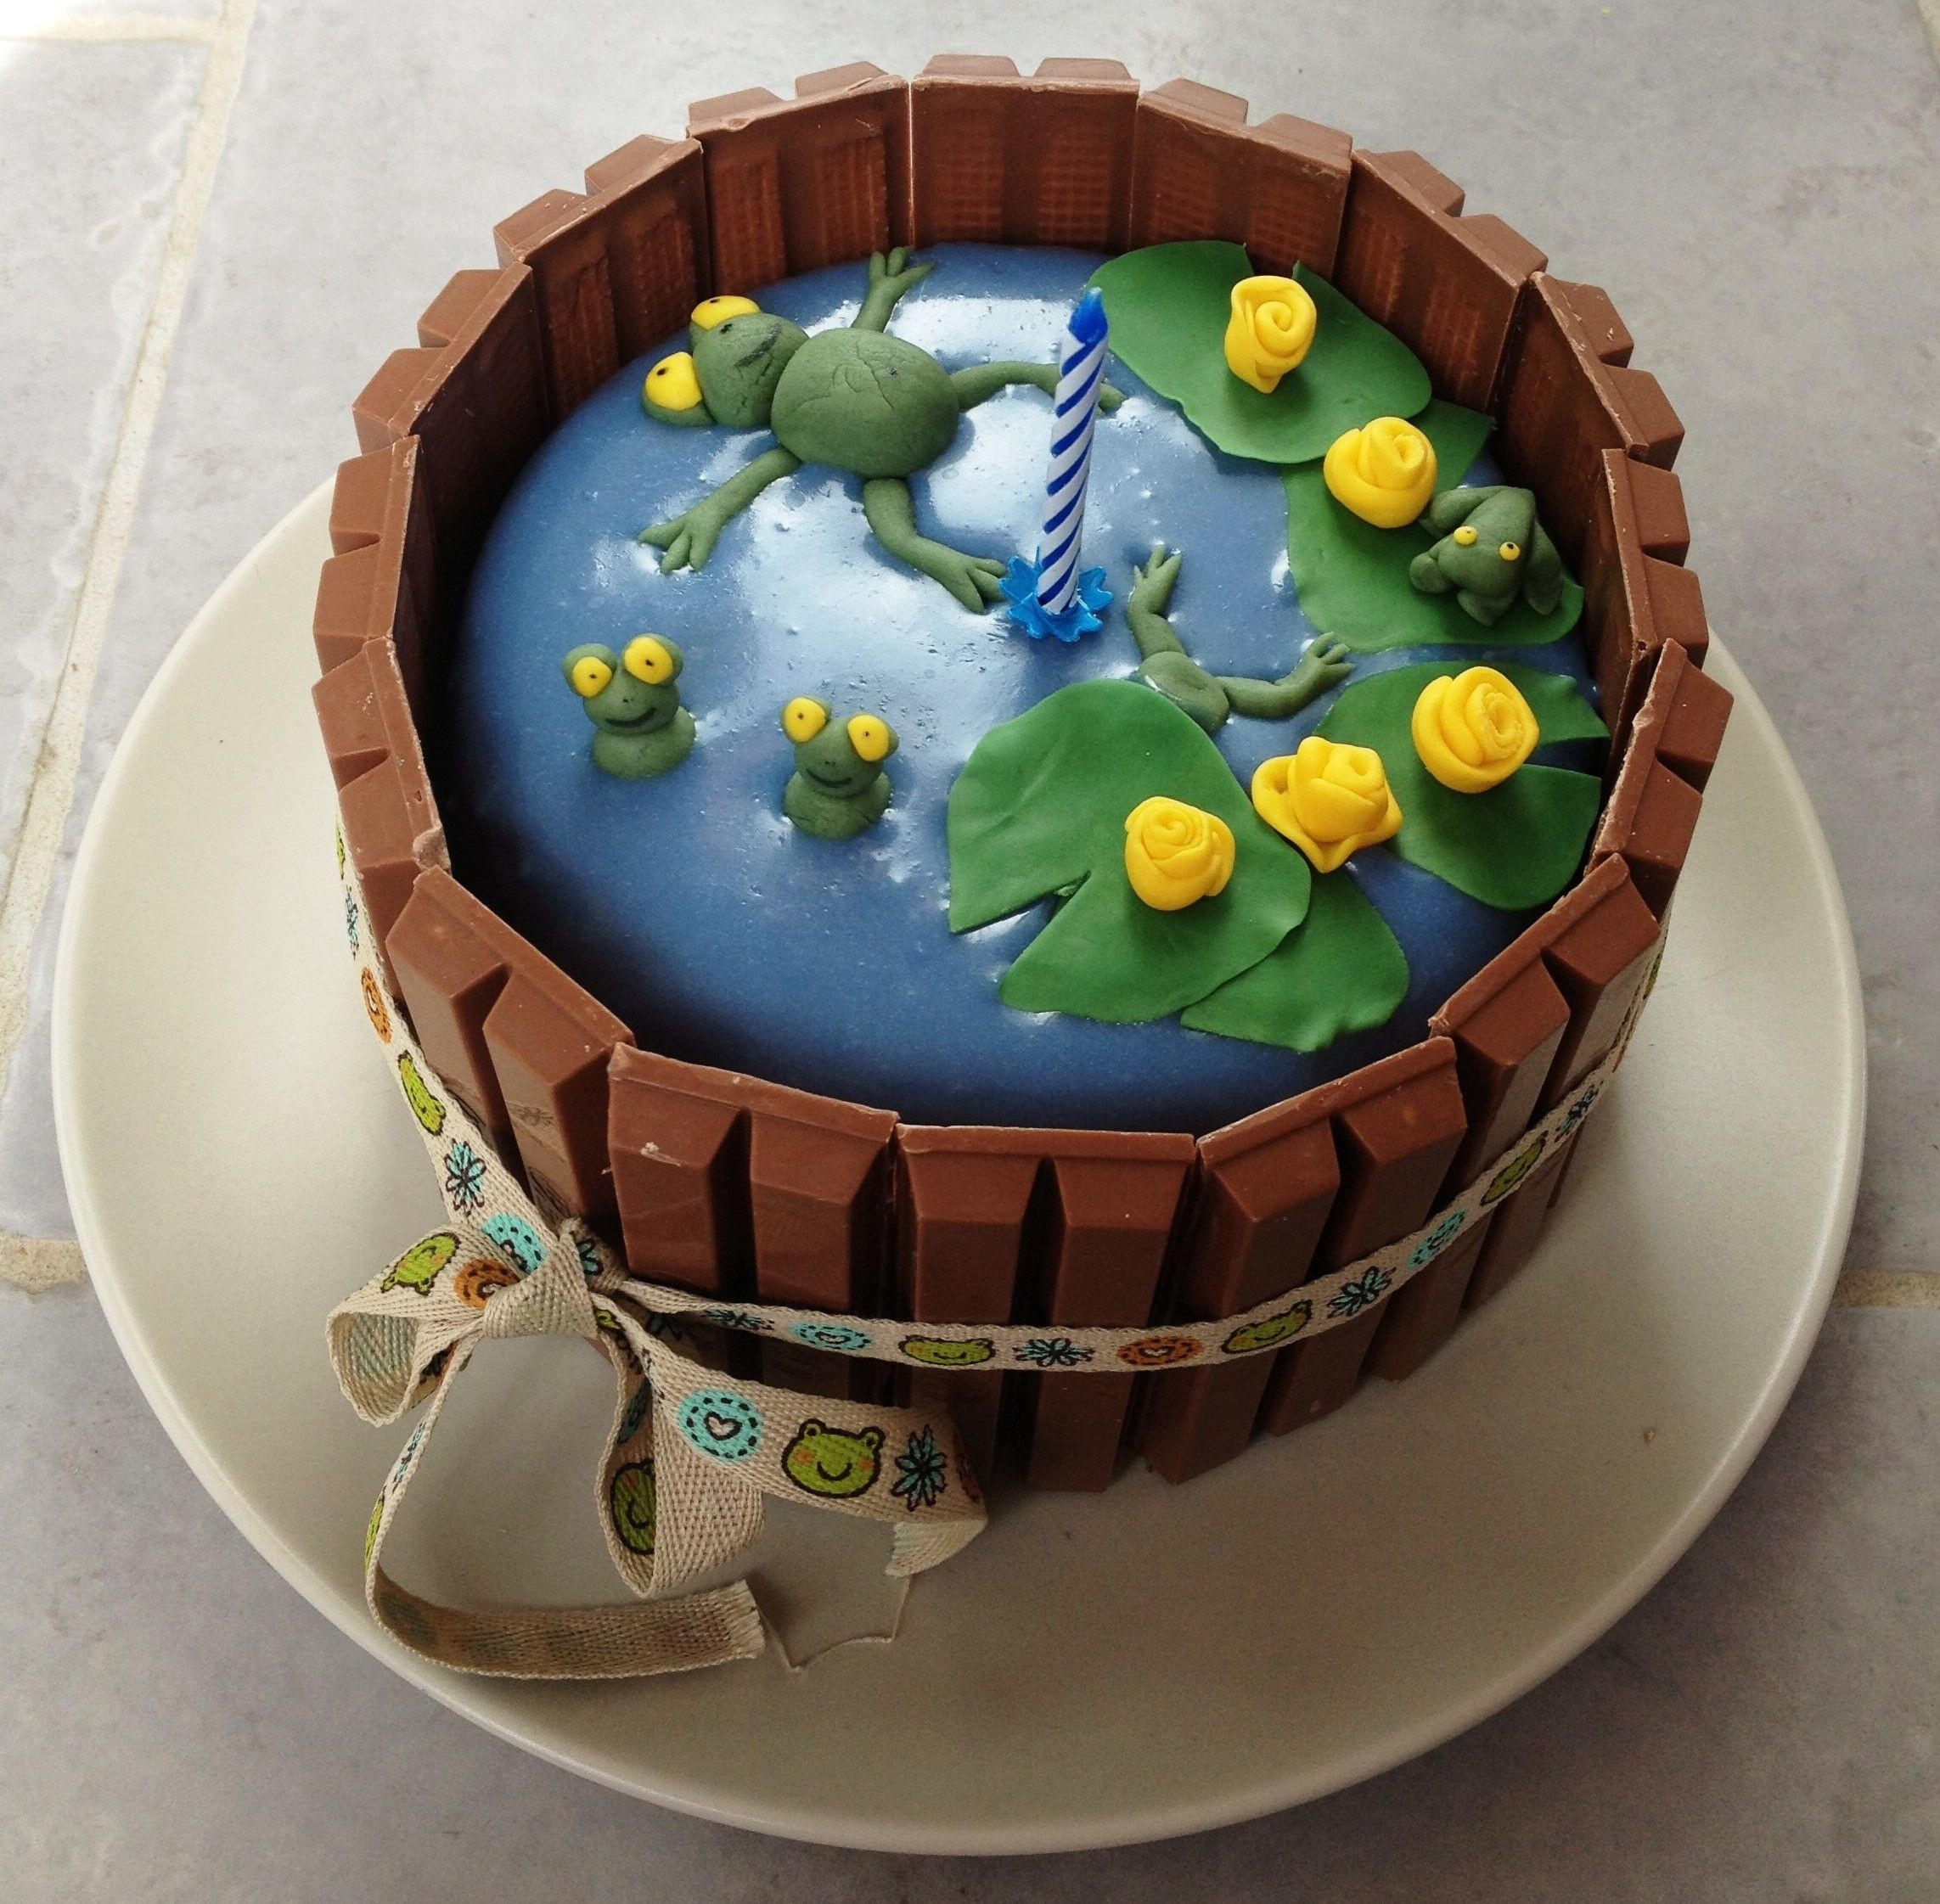 Frog Birthday Cake
 The 25 best Frog cakes ideas on Pinterest